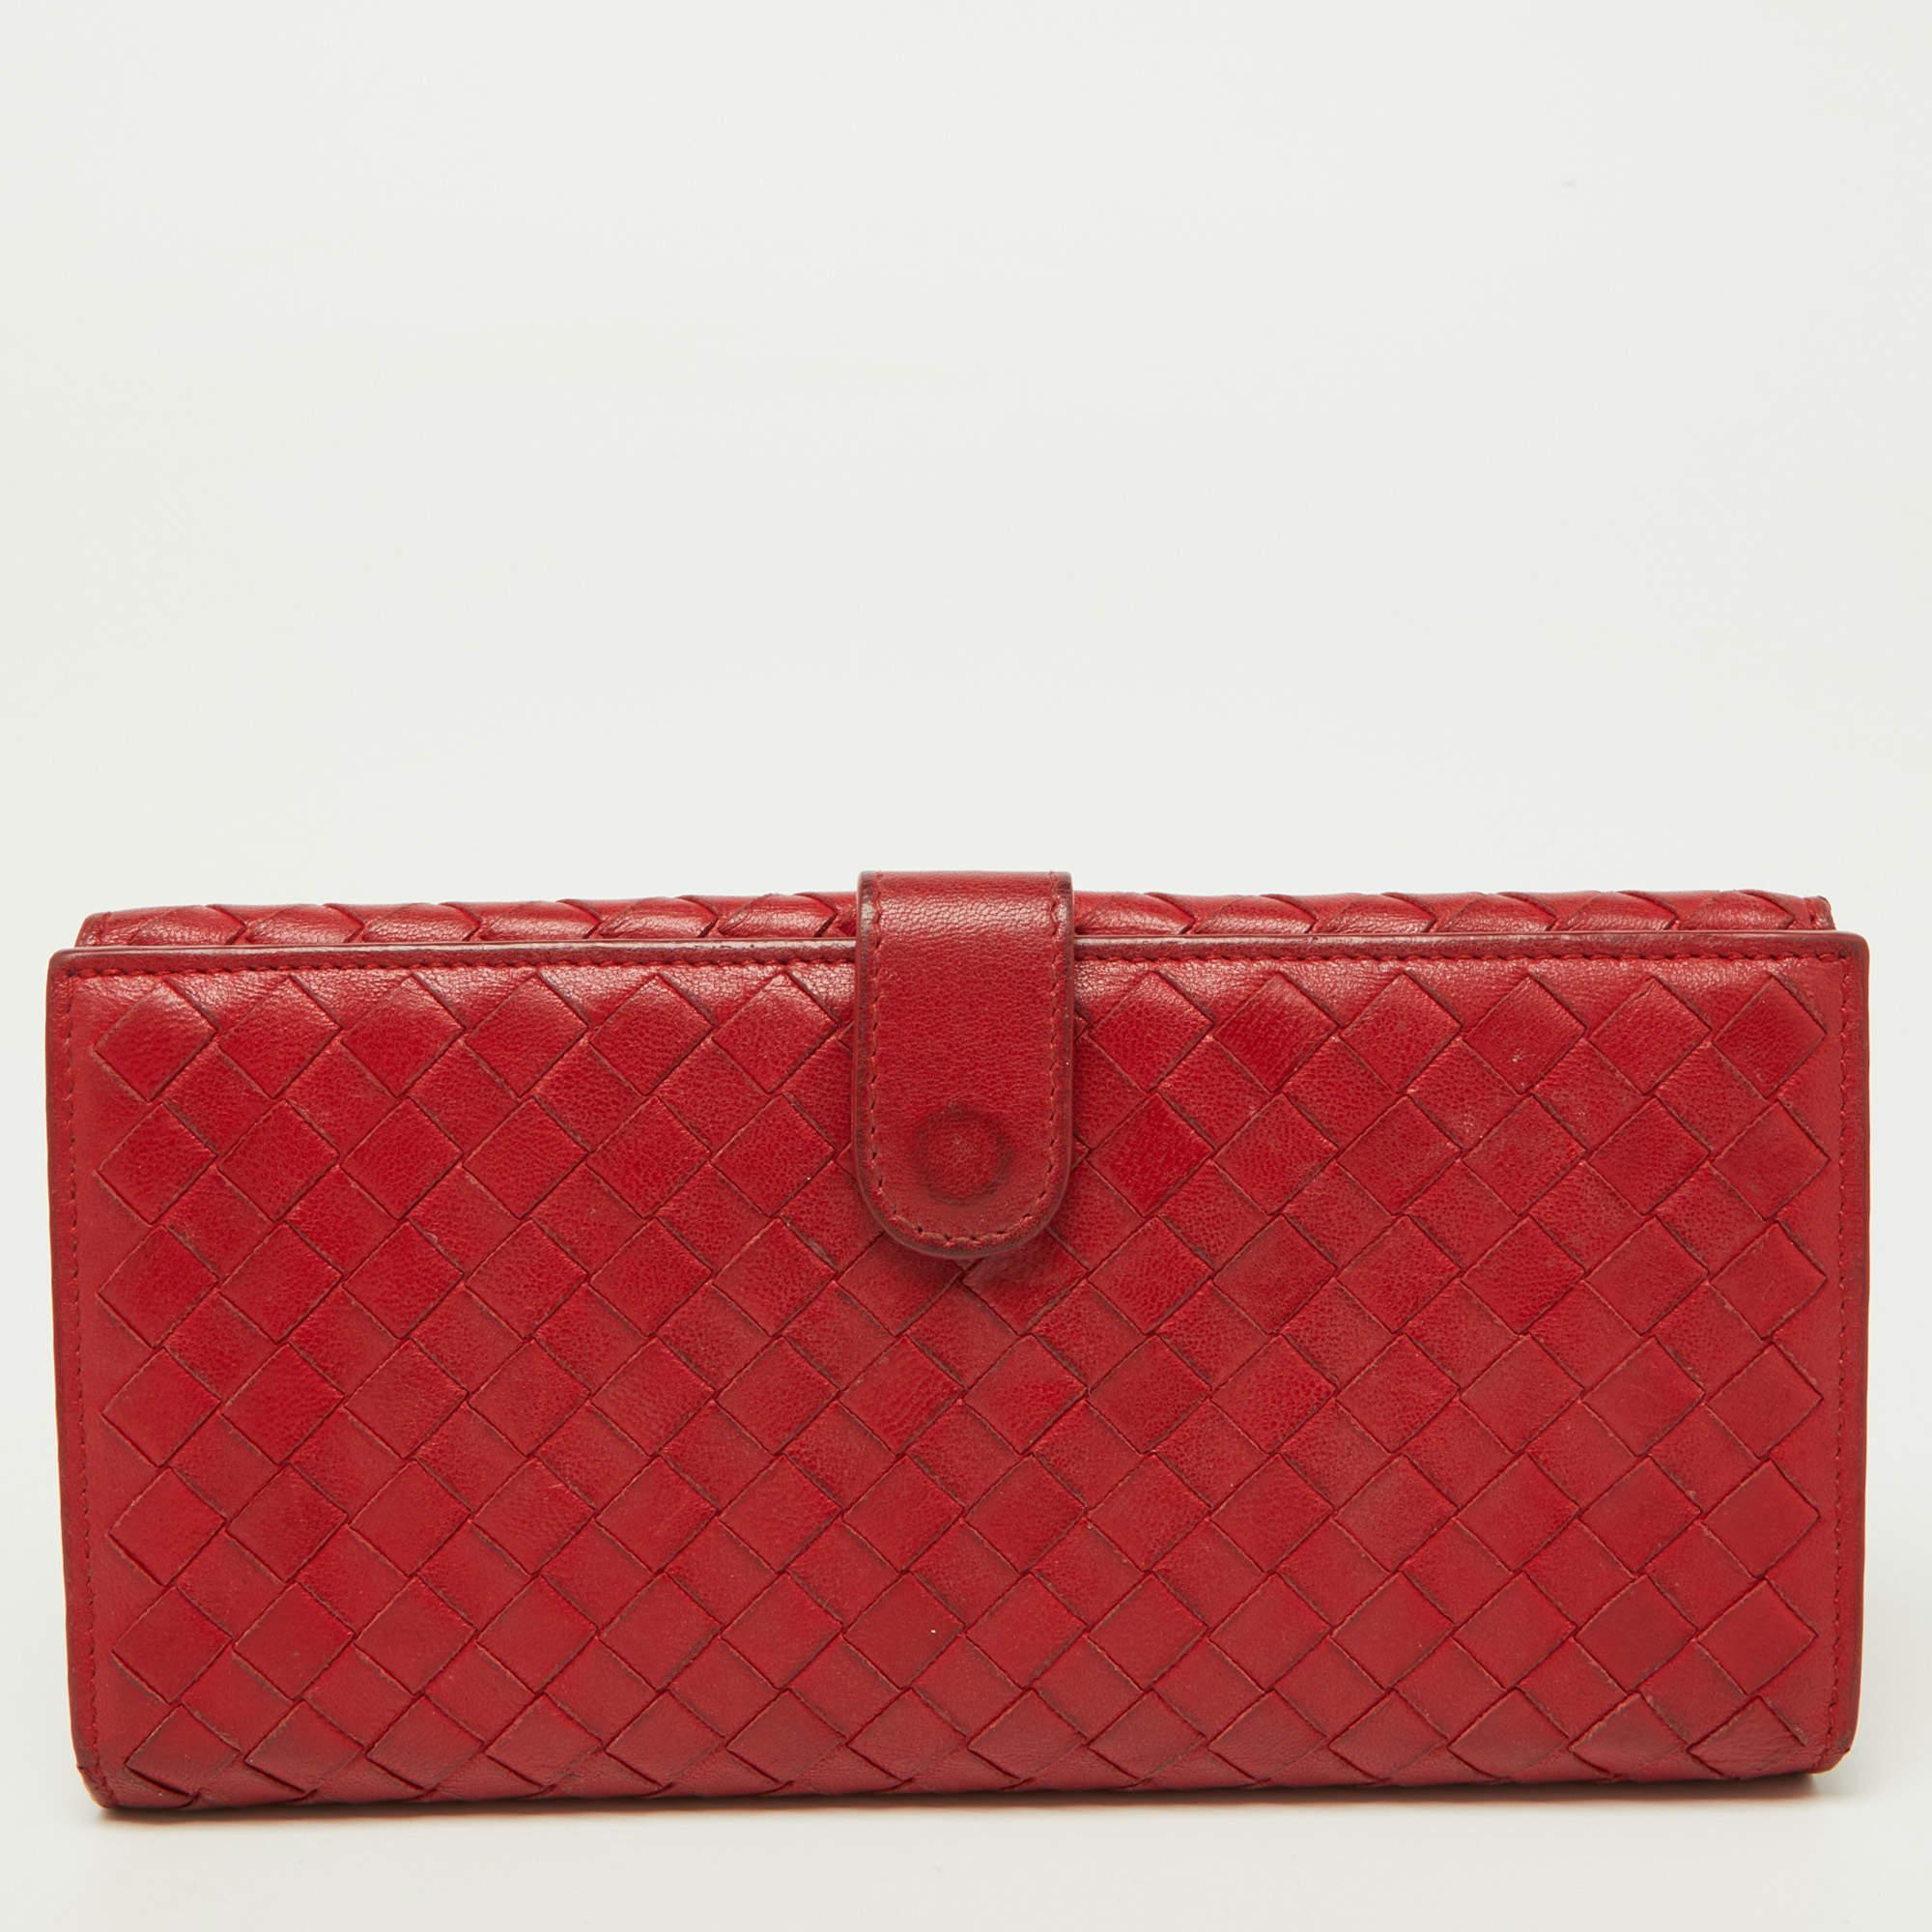 Bottega Veneta Red Intrecciato Leather Flap Continental Wallet For Sale 7